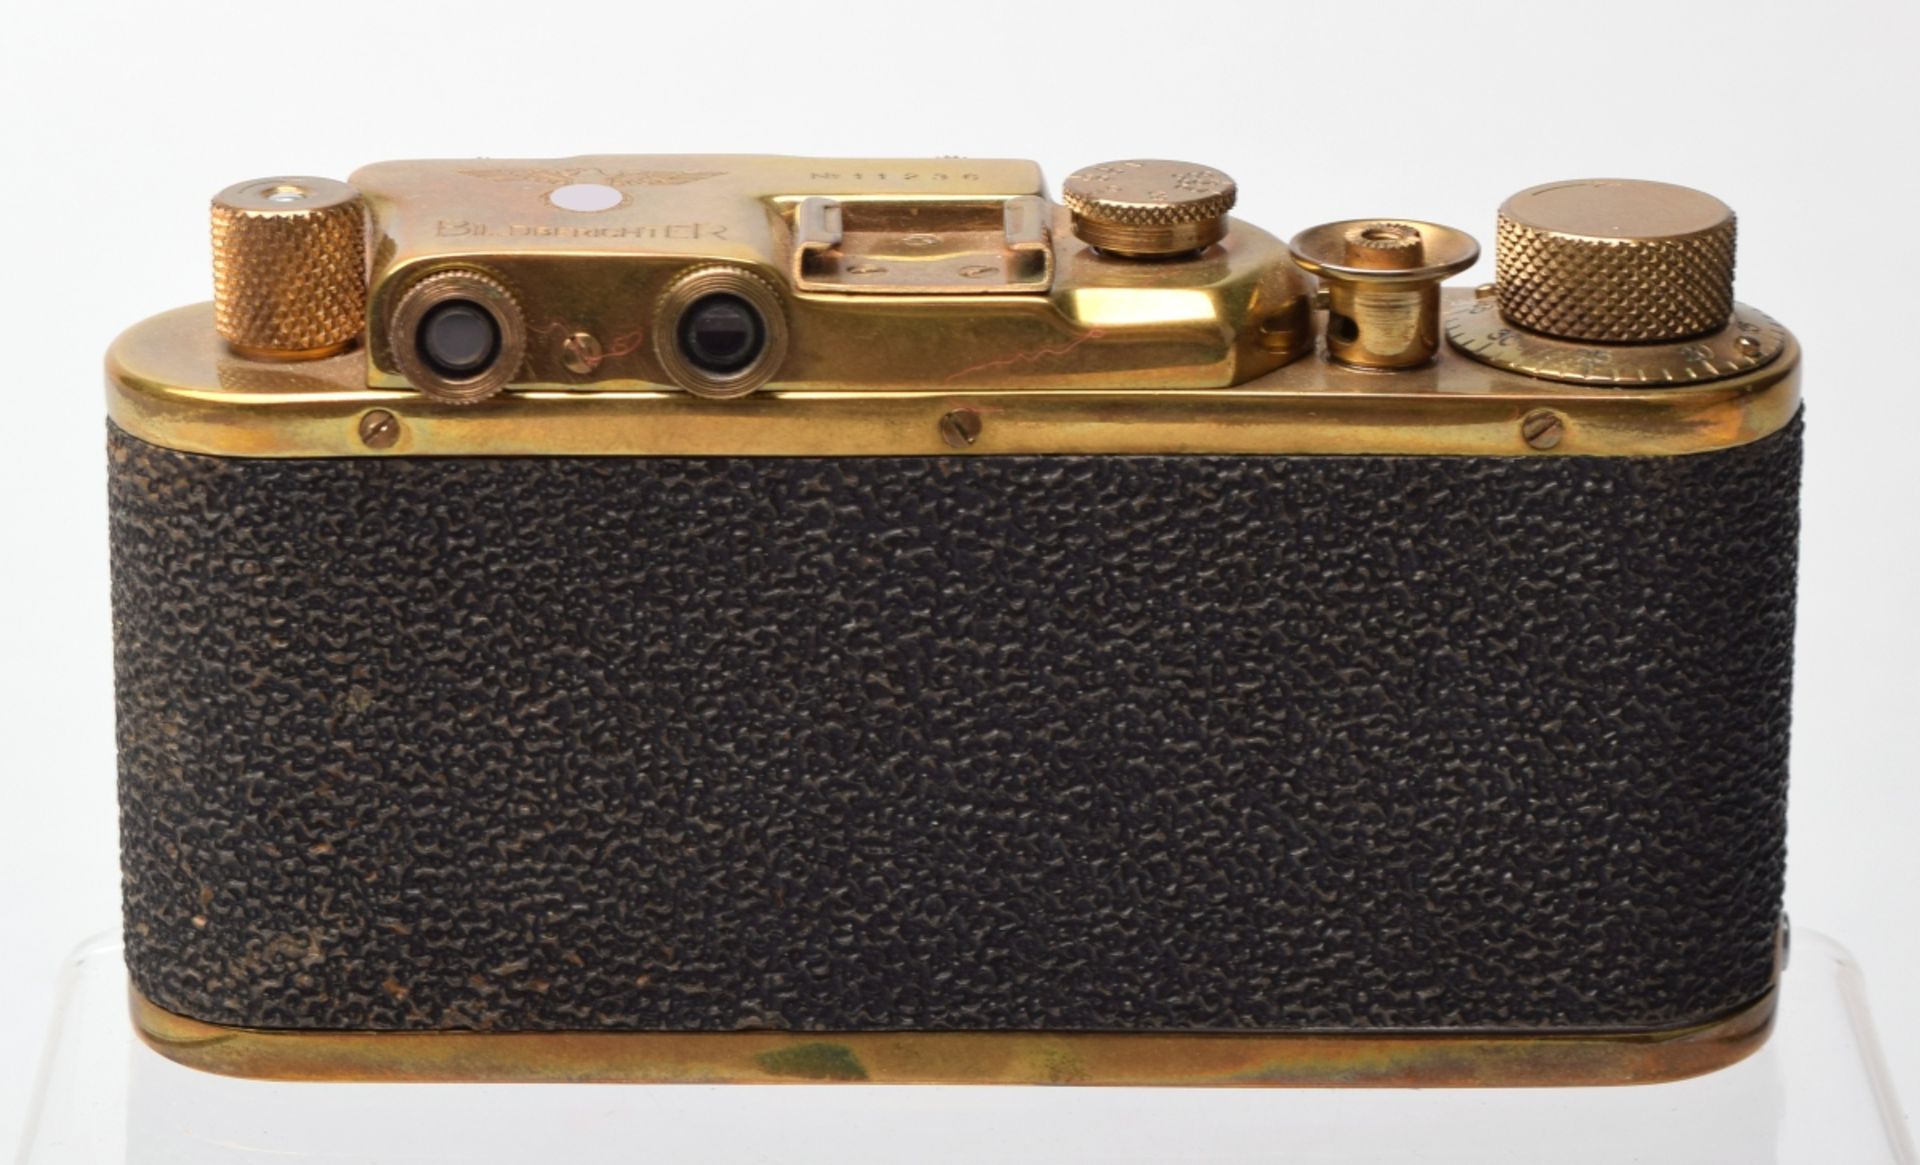 Kamera Hersteller: Leica, Modell: II Gold (wohl russische Kopie), vermessingt, Nr. 11236, auf Obers - Image 3 of 5